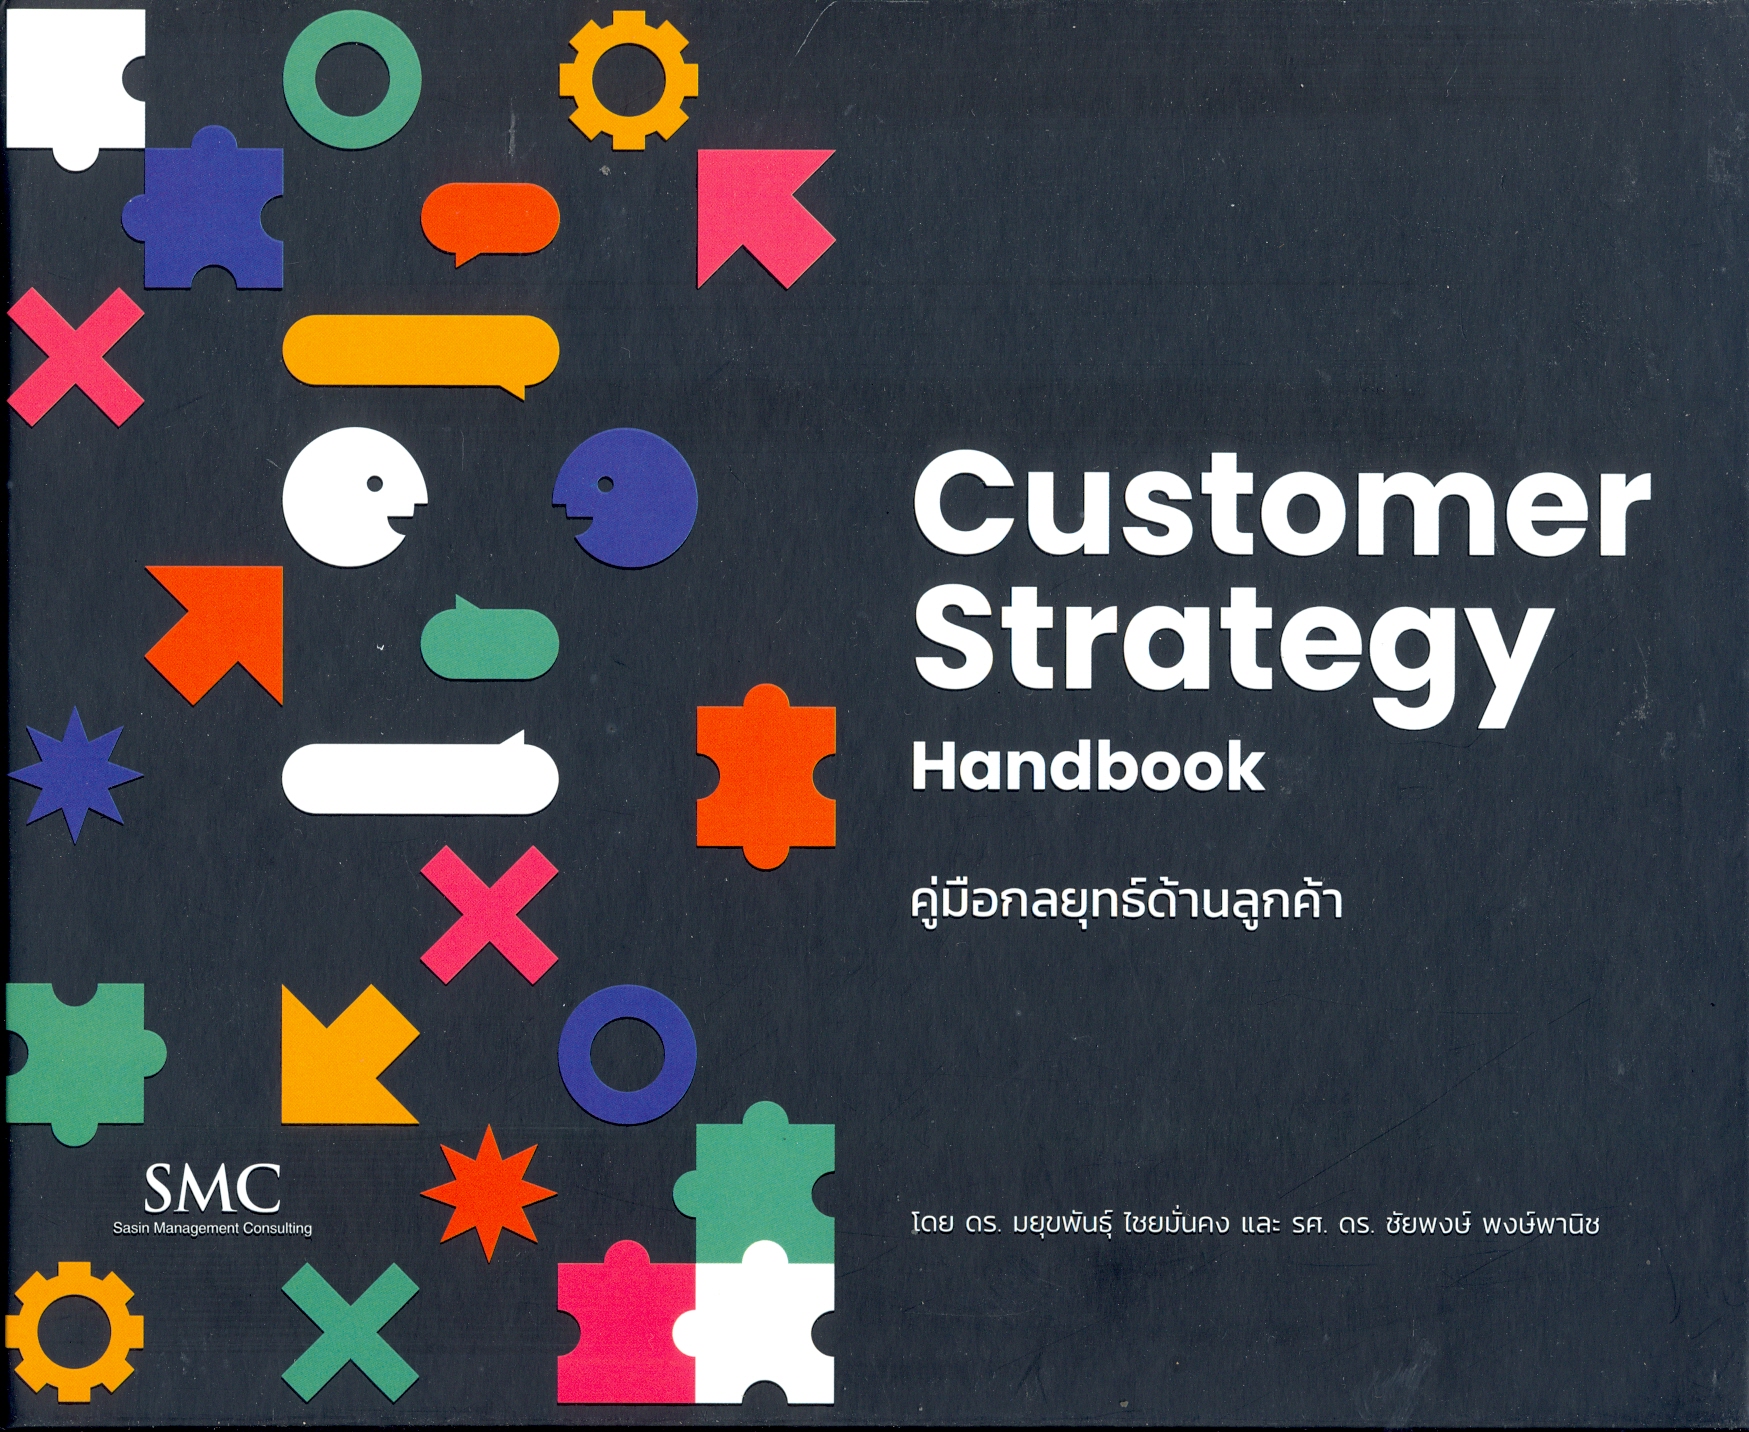 Customer strategy handbook